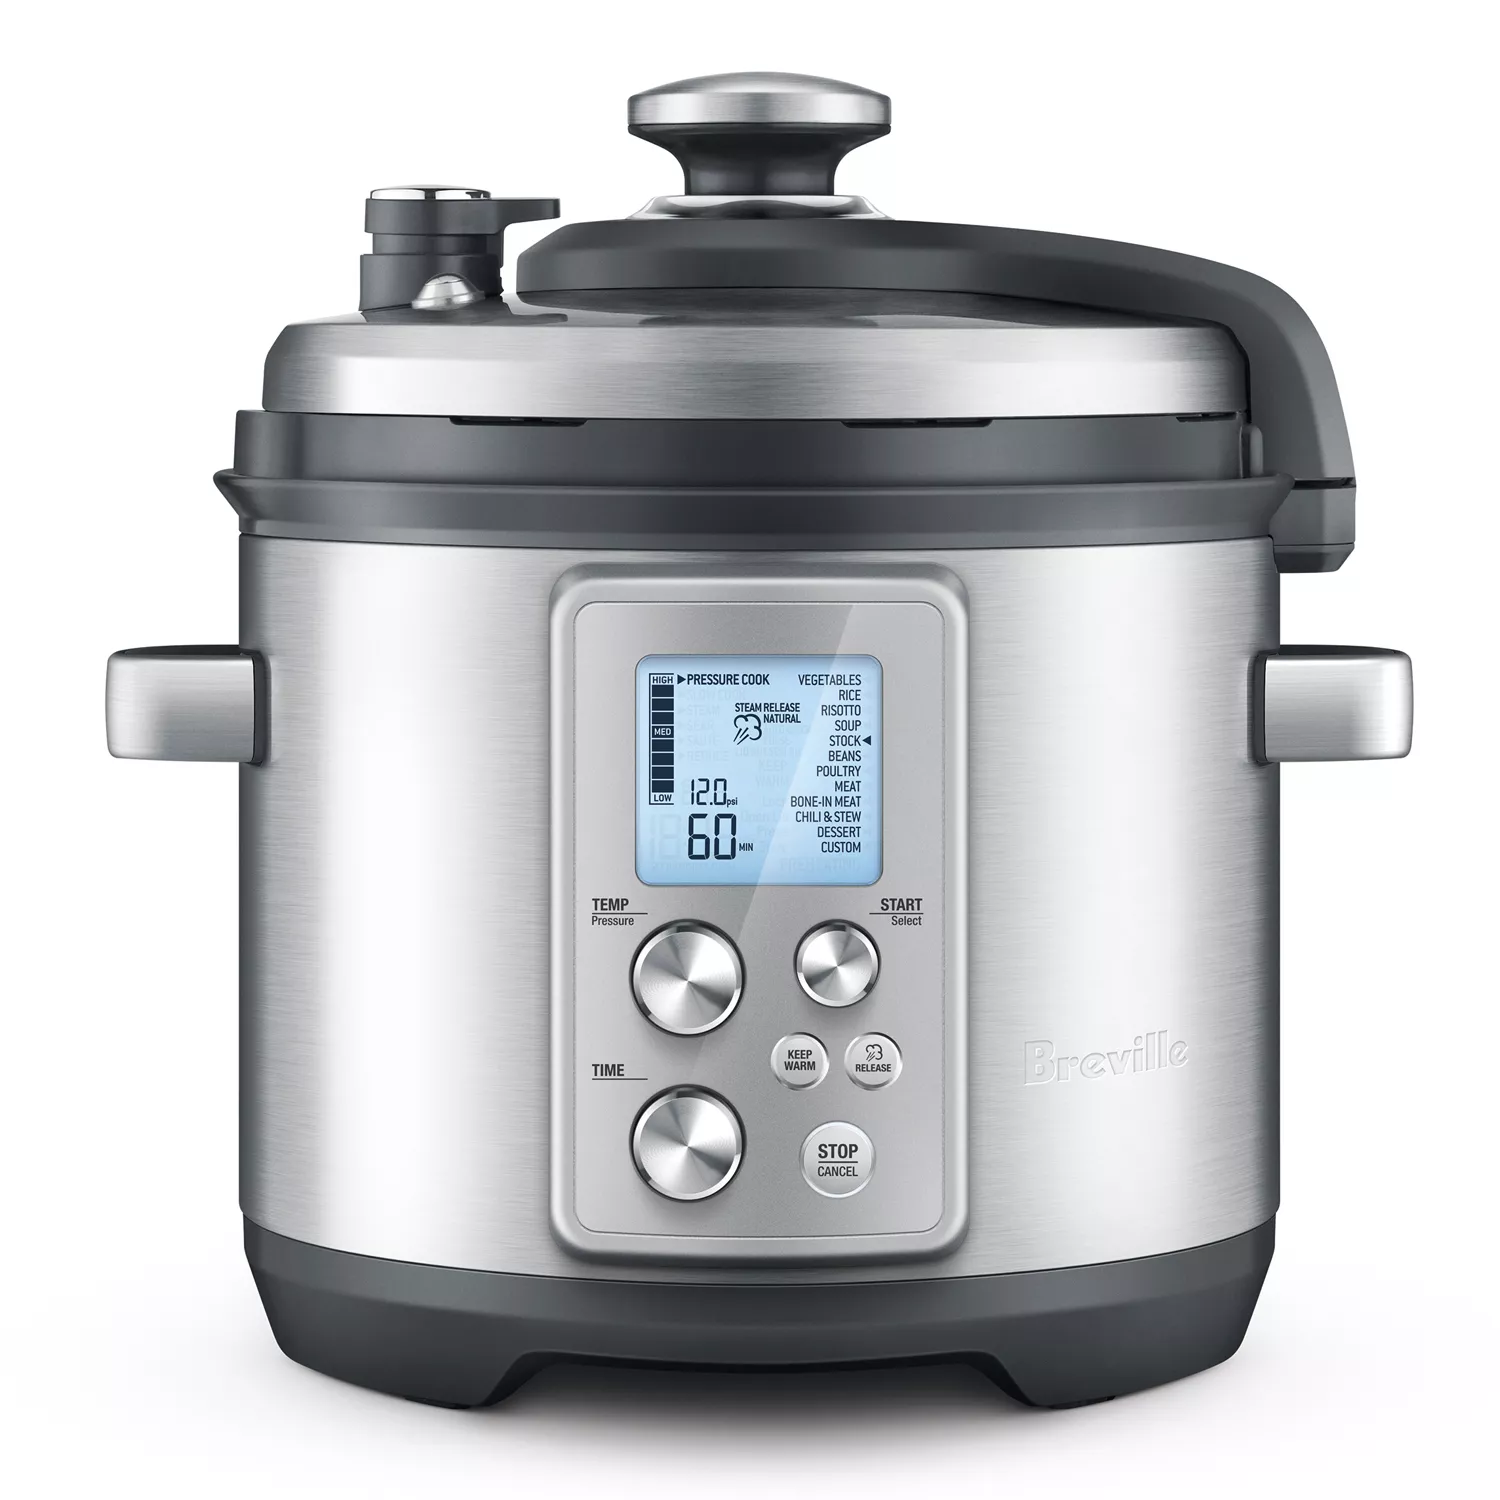 Cuisinart - 6-Quart High Pressure Multicooker